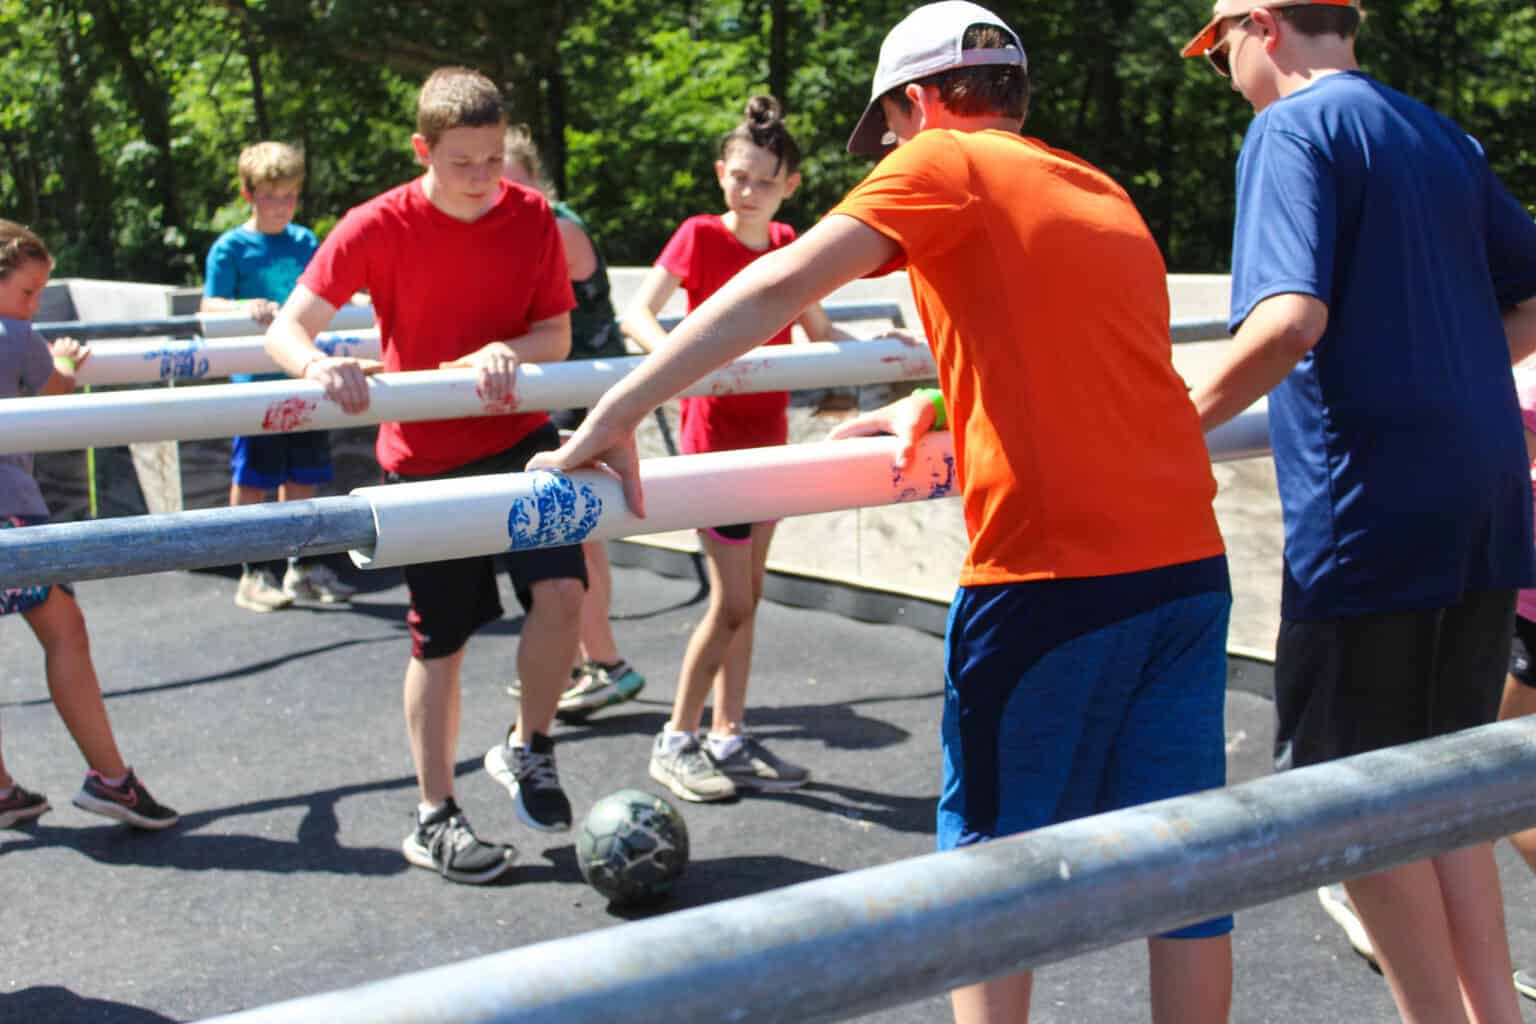 Kids at an Iowa summer camp enjoy a fun game of Human Foosball.